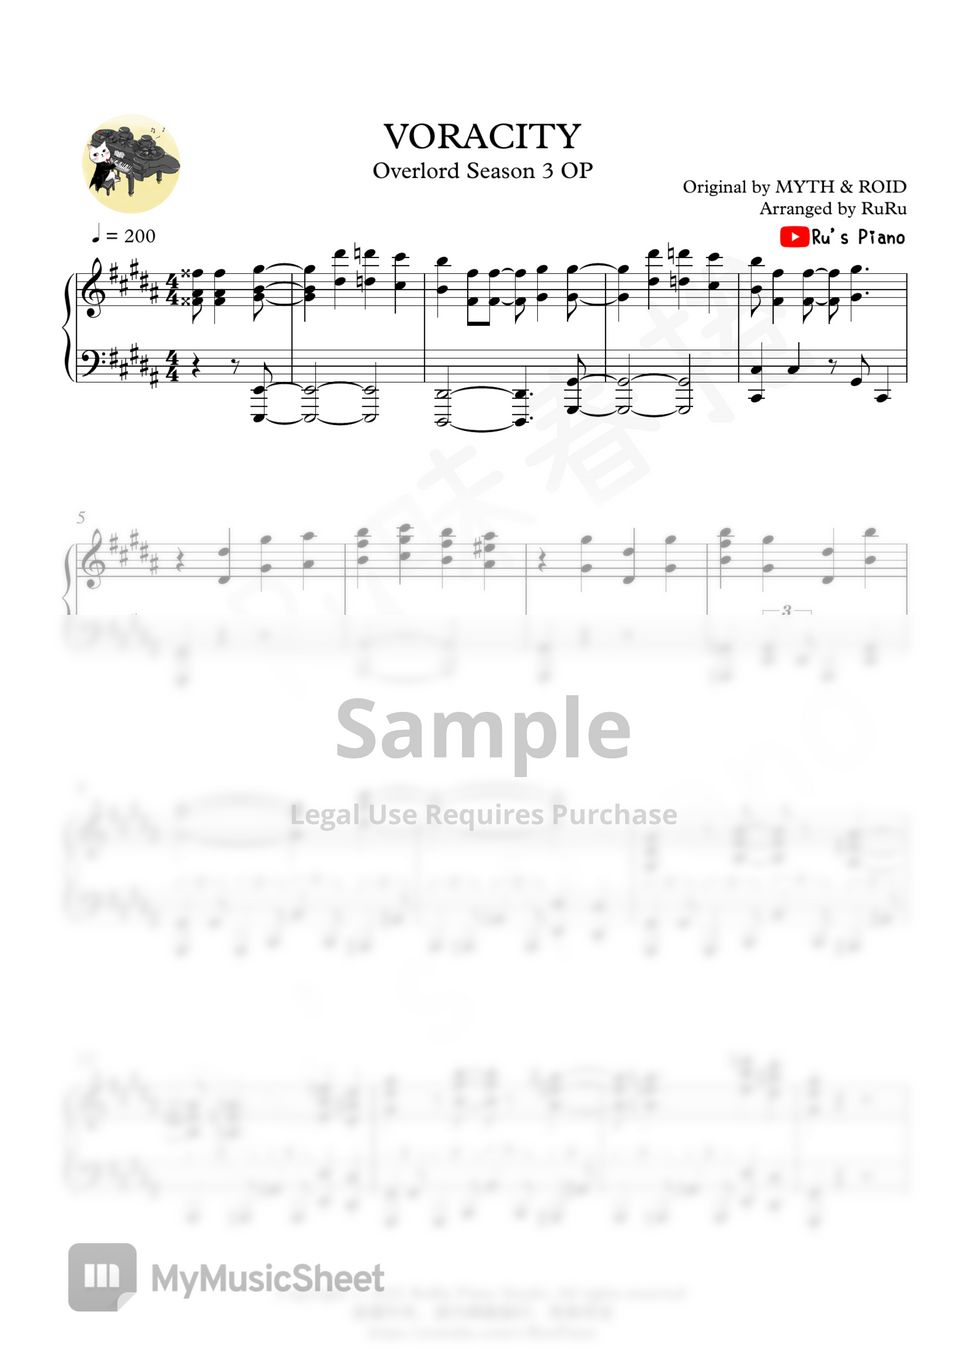 MYTH&ROID - OVERLORD III OP「VORACITY」 (オーバーロード) by Ru's Piano